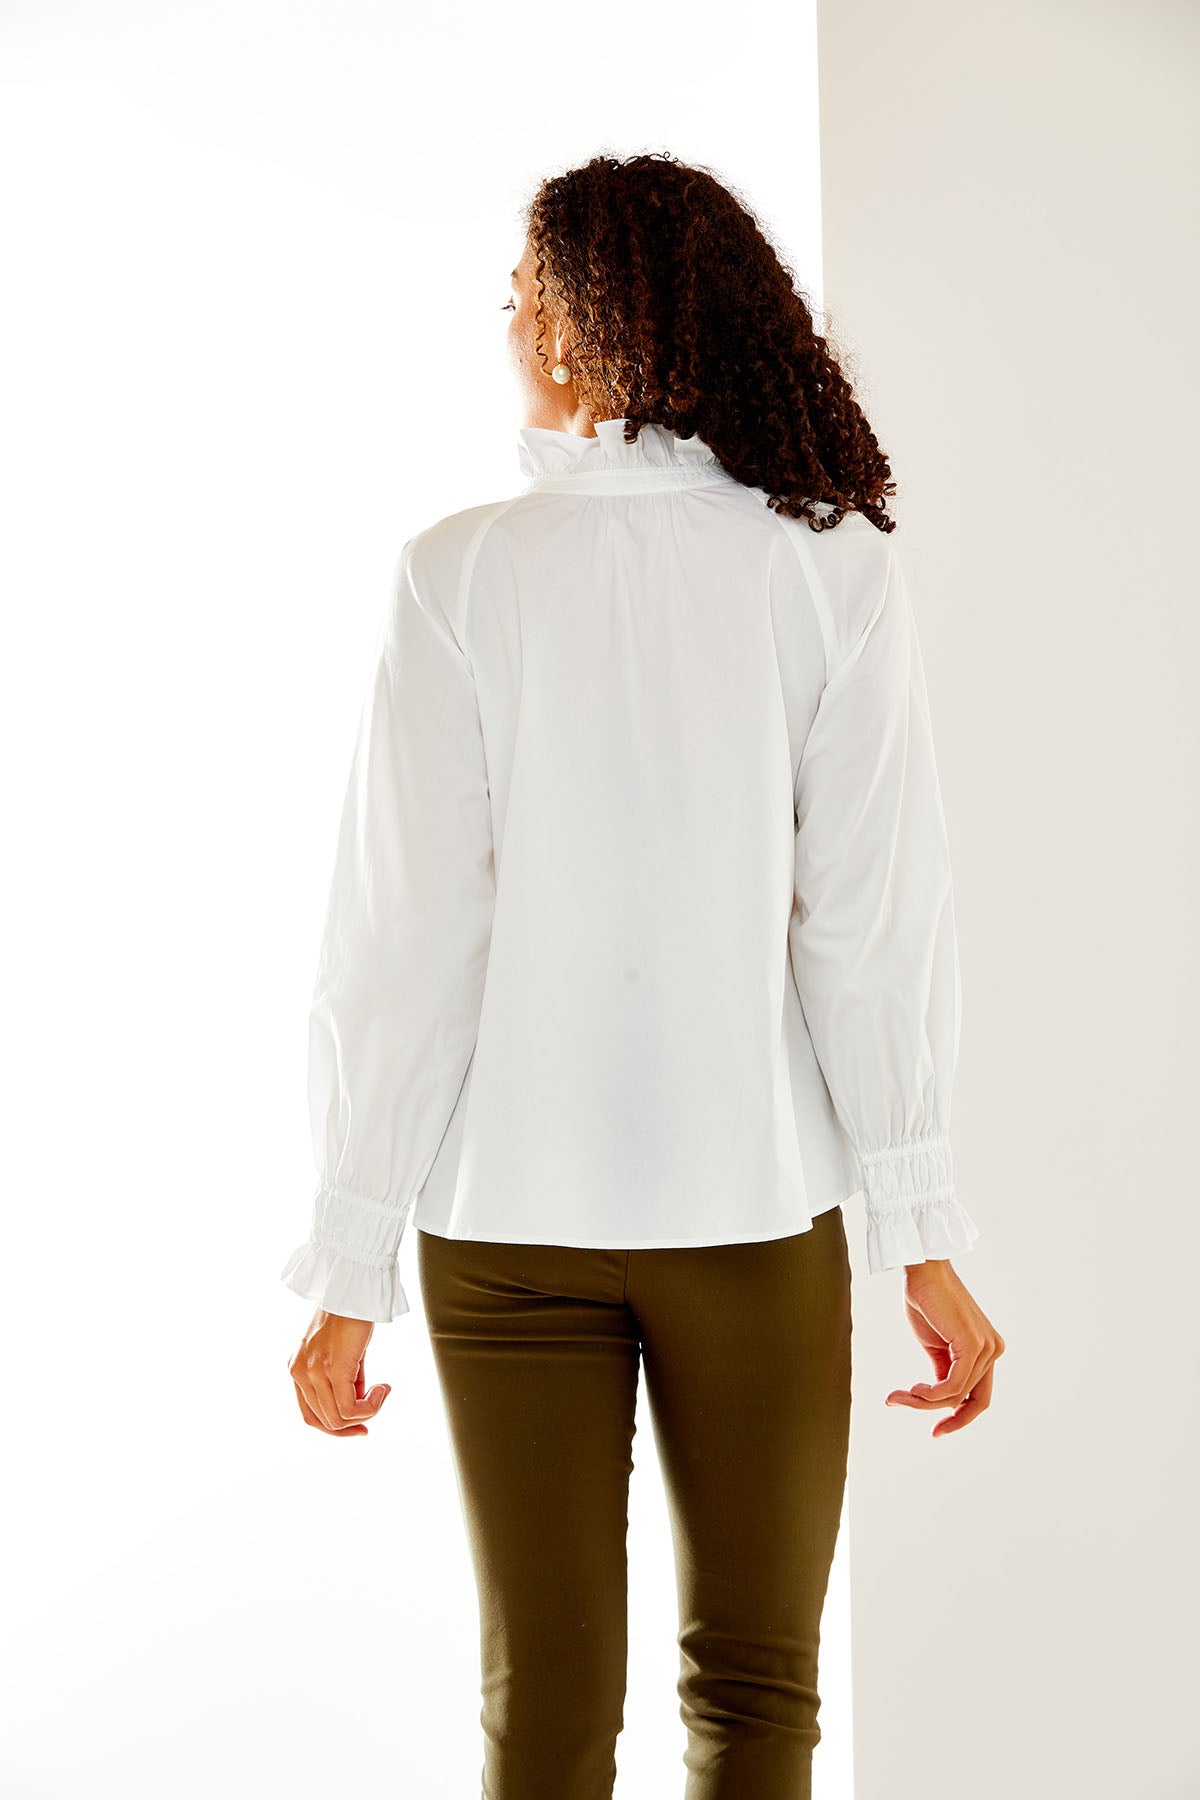 Woman in white button down shirt